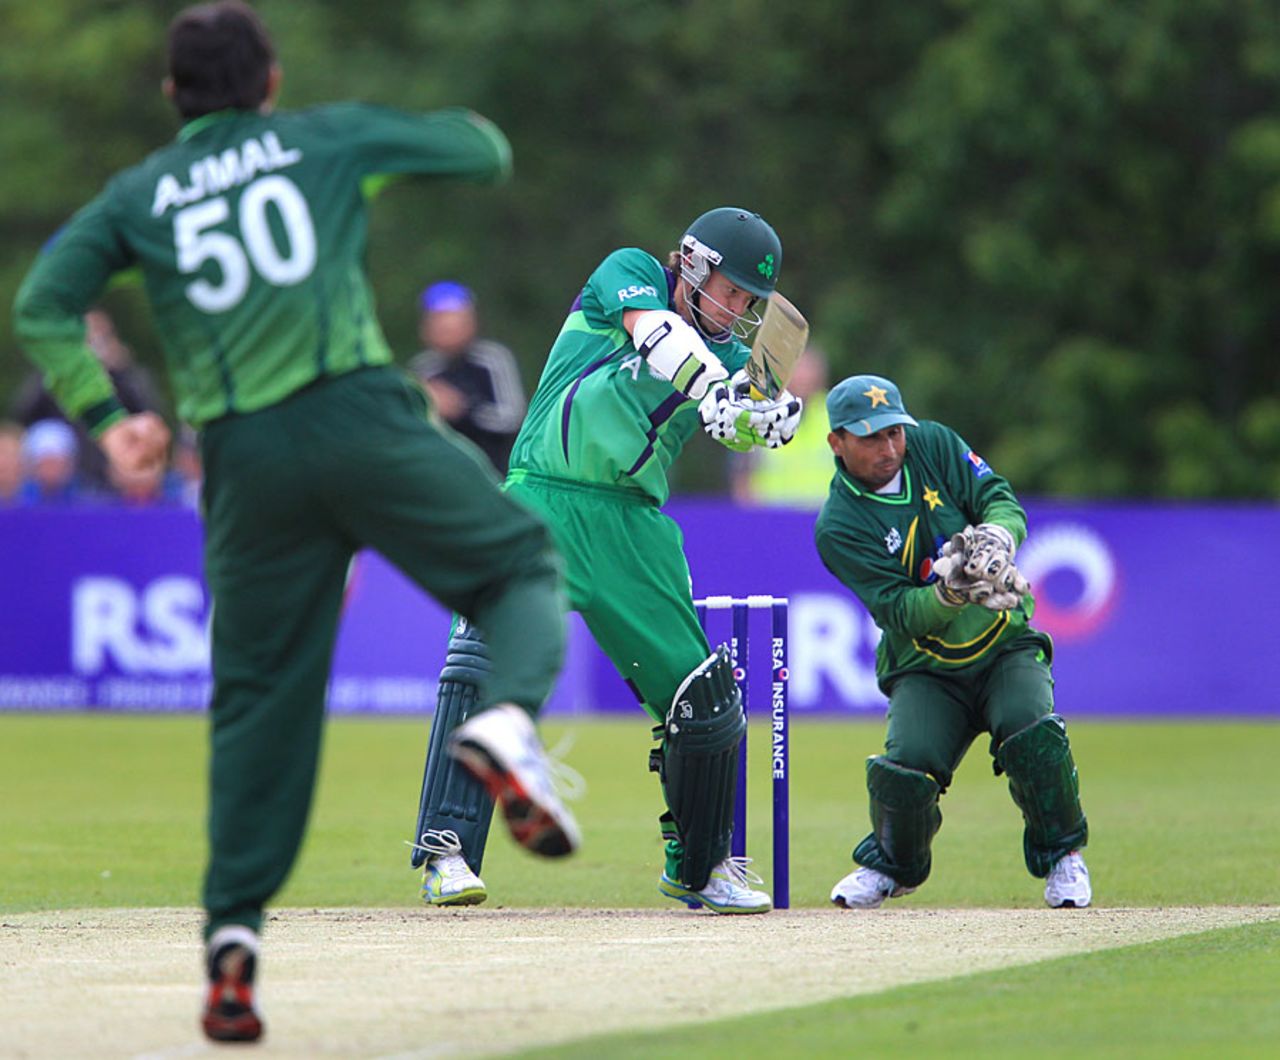 Pakistan got off to a good start, getting opener Ed Joyce early, Ireland v Pakistan, 2nd ODI, Belfast, May 30, 2011